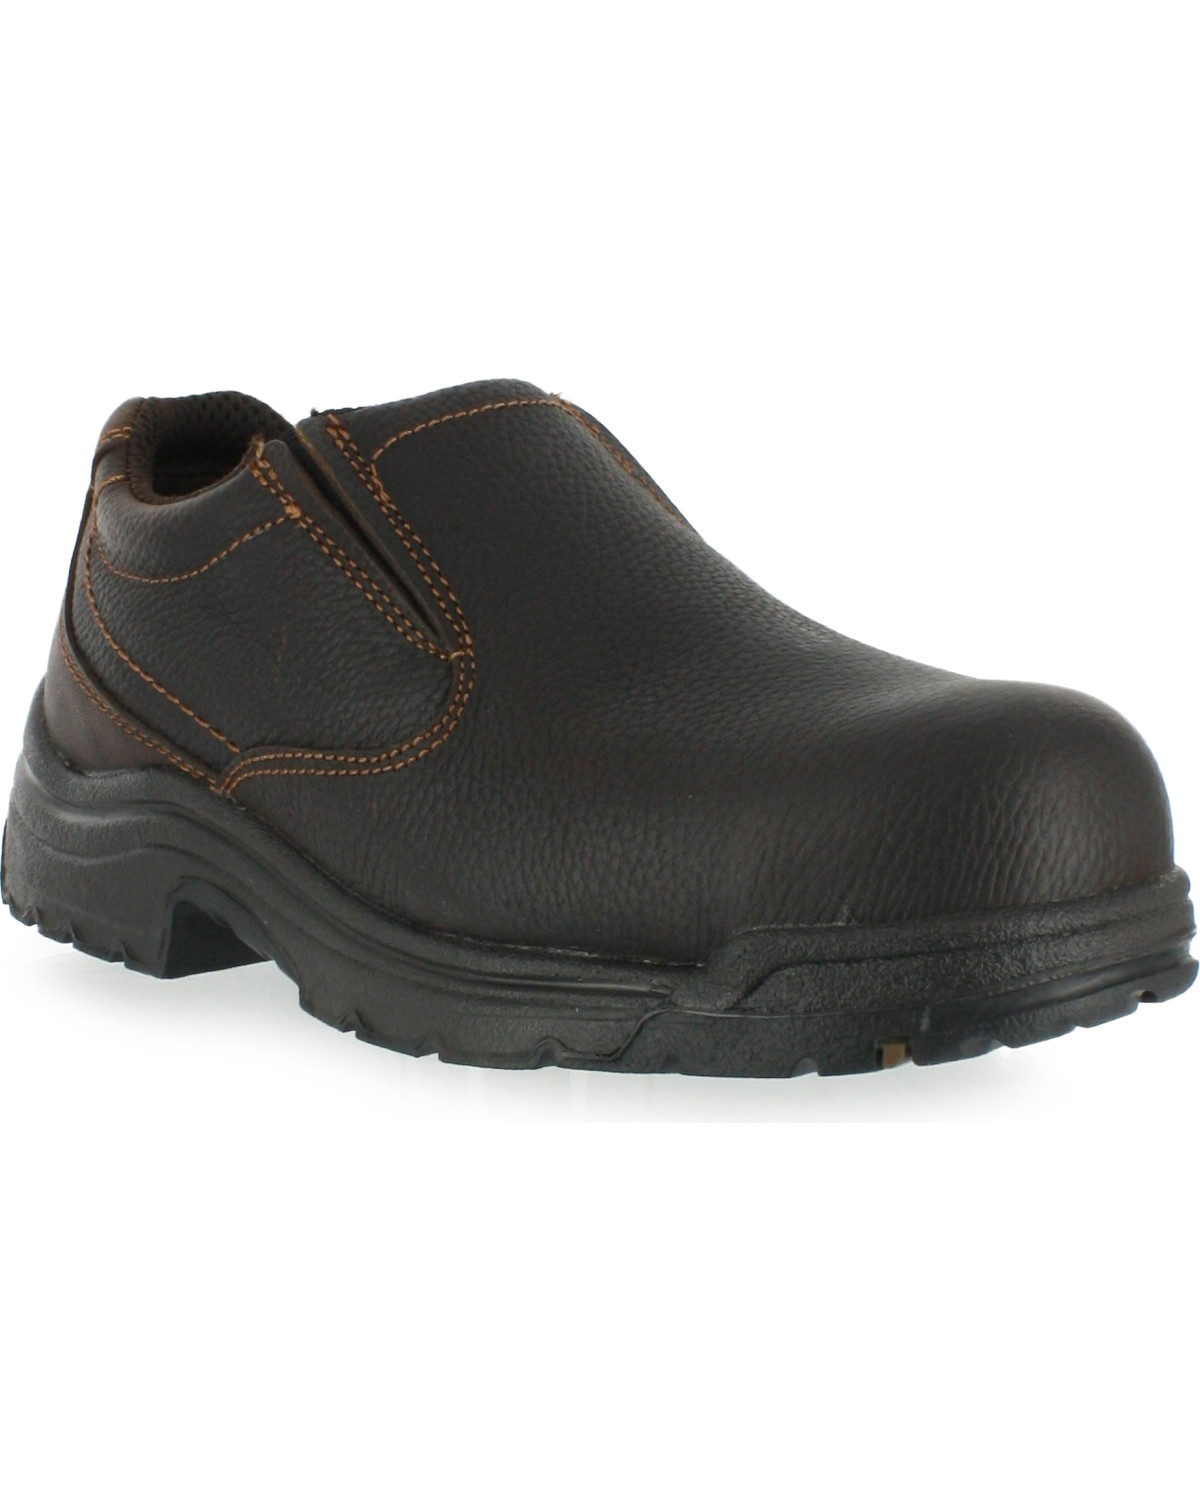 Timberland Pro Men's TITAN Work Shoes - Alloy Toe